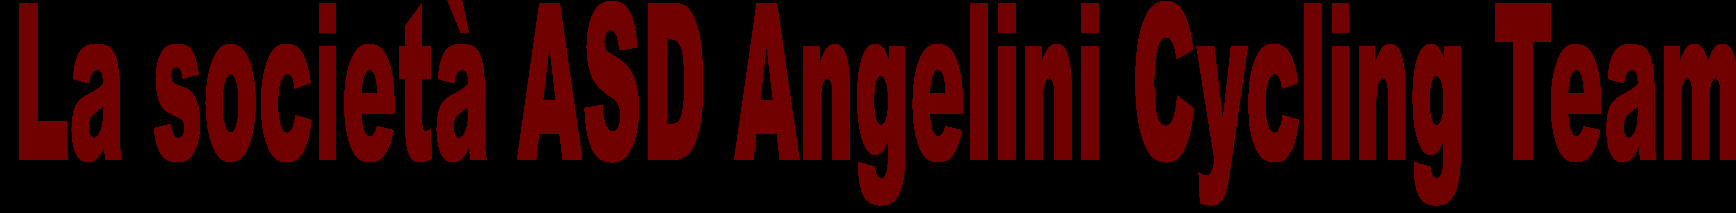 angelini-cycling-team